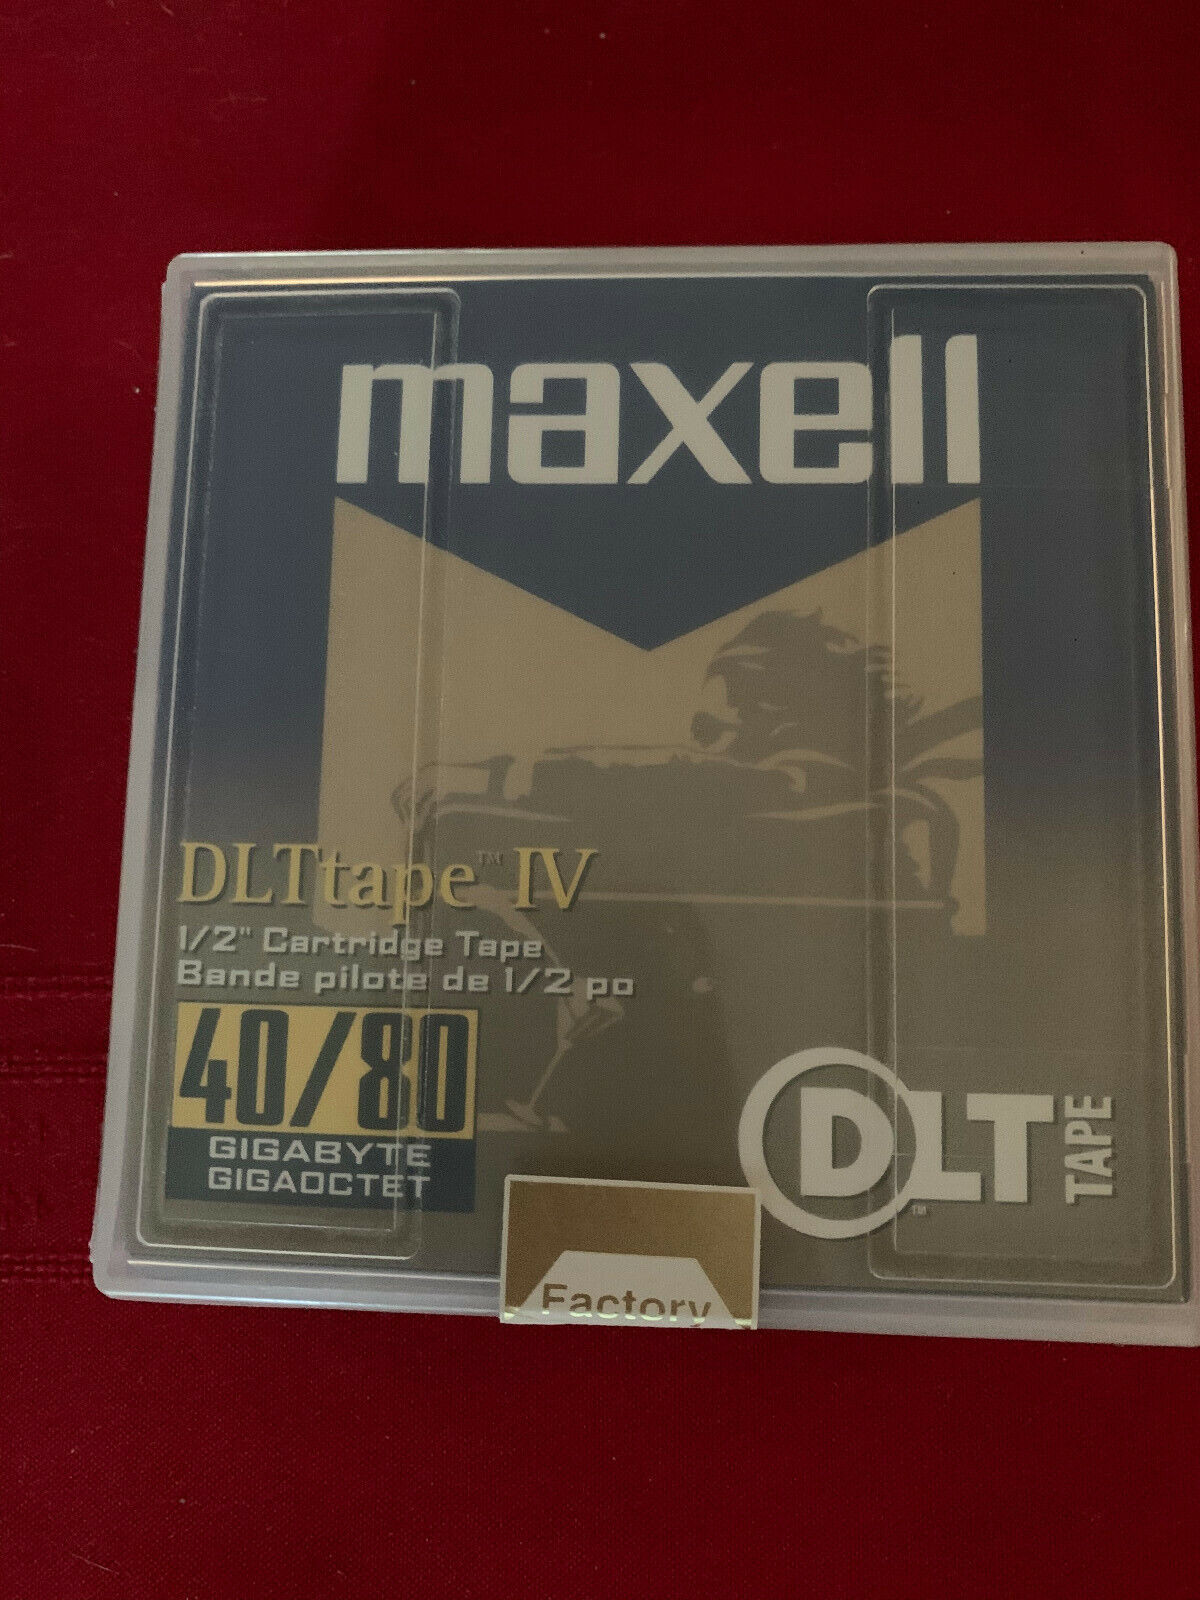 MAXELL DLT Tape IV 40/80GB 1/2inch Tape Cartridge